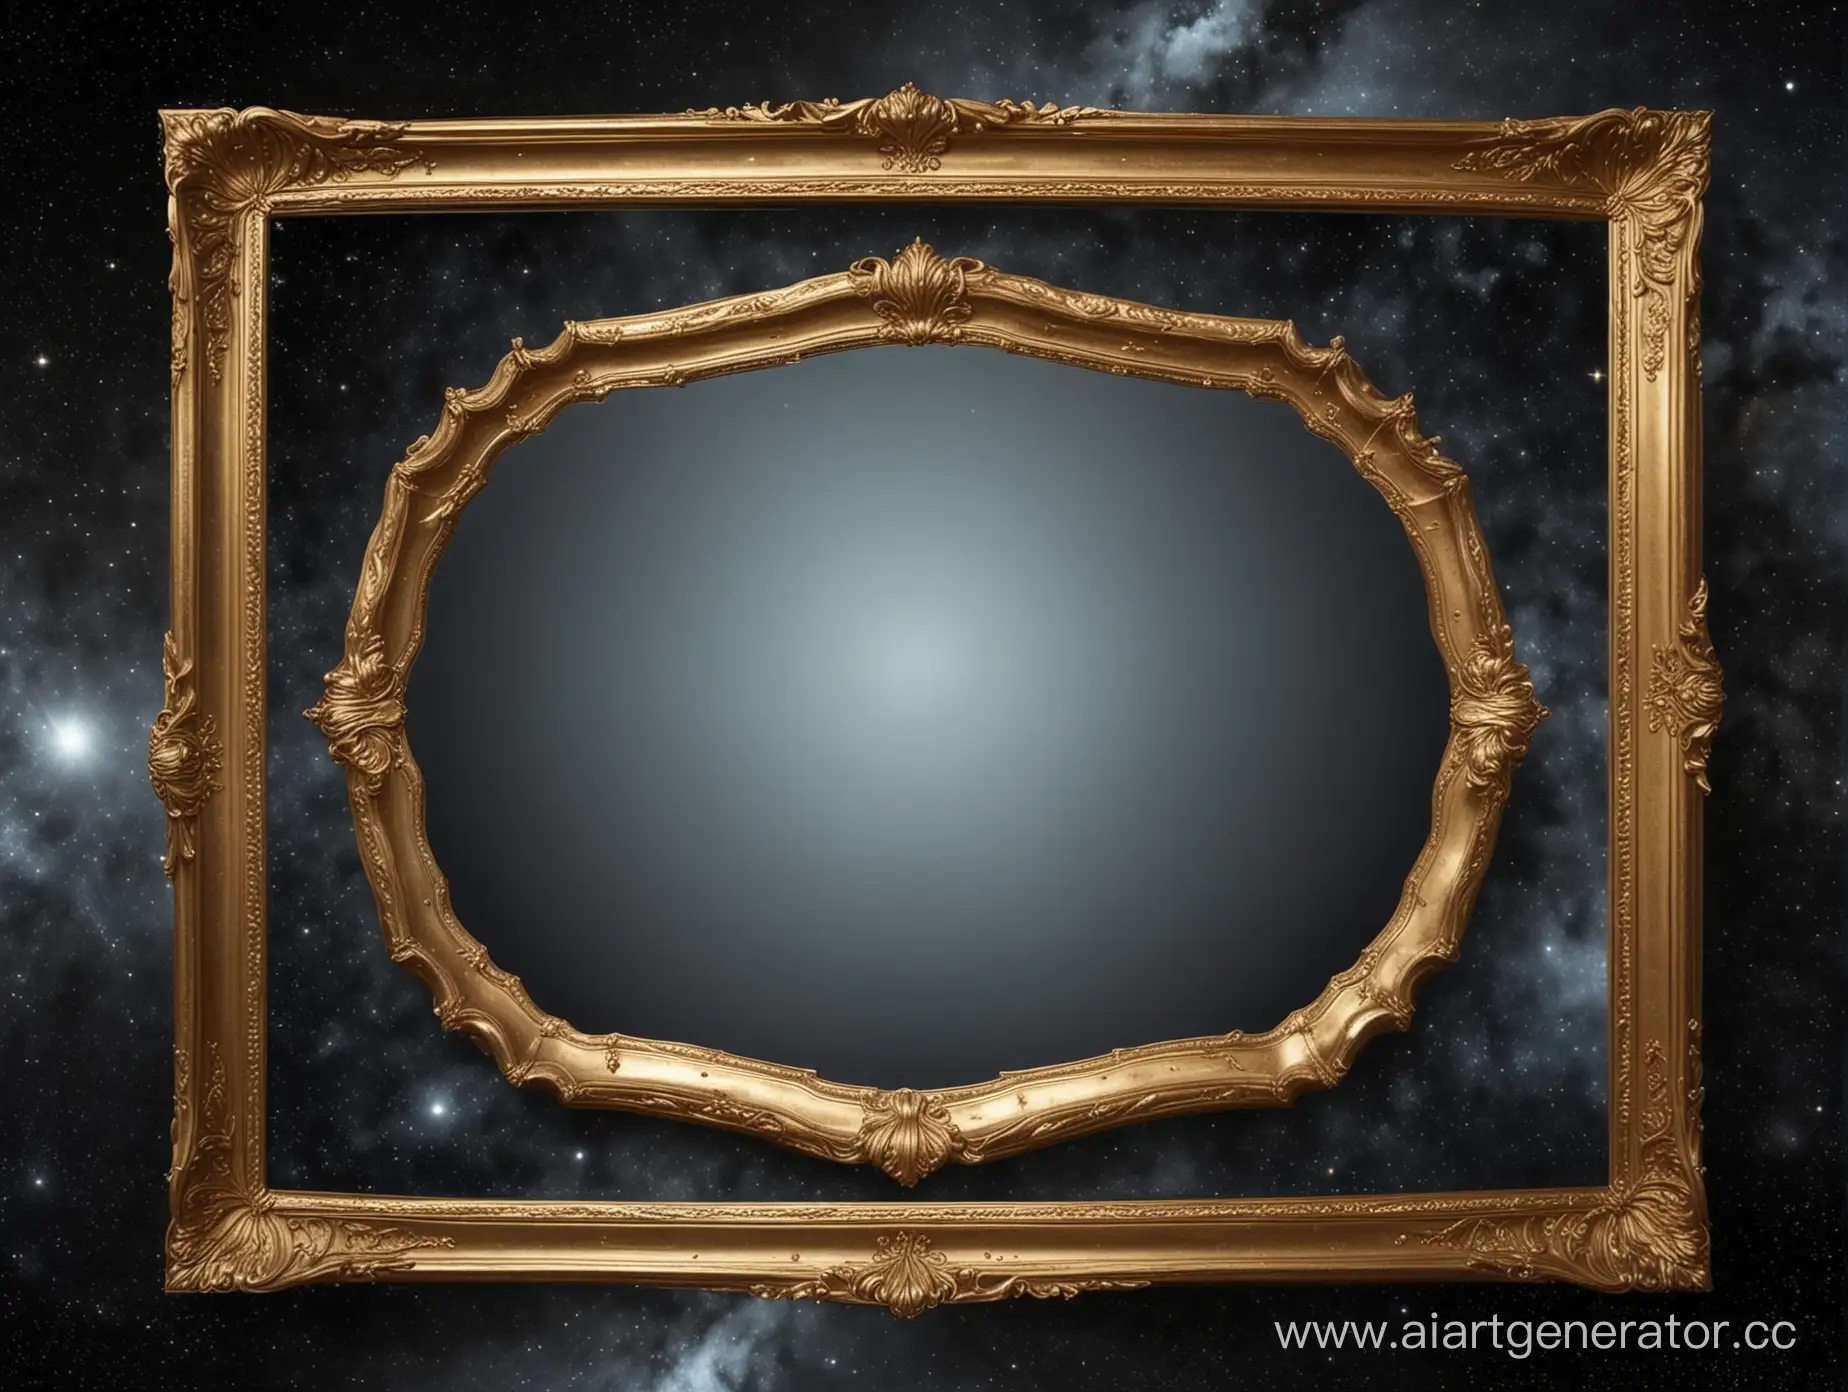 Golden-Framed-Mirror-Floating-in-Space